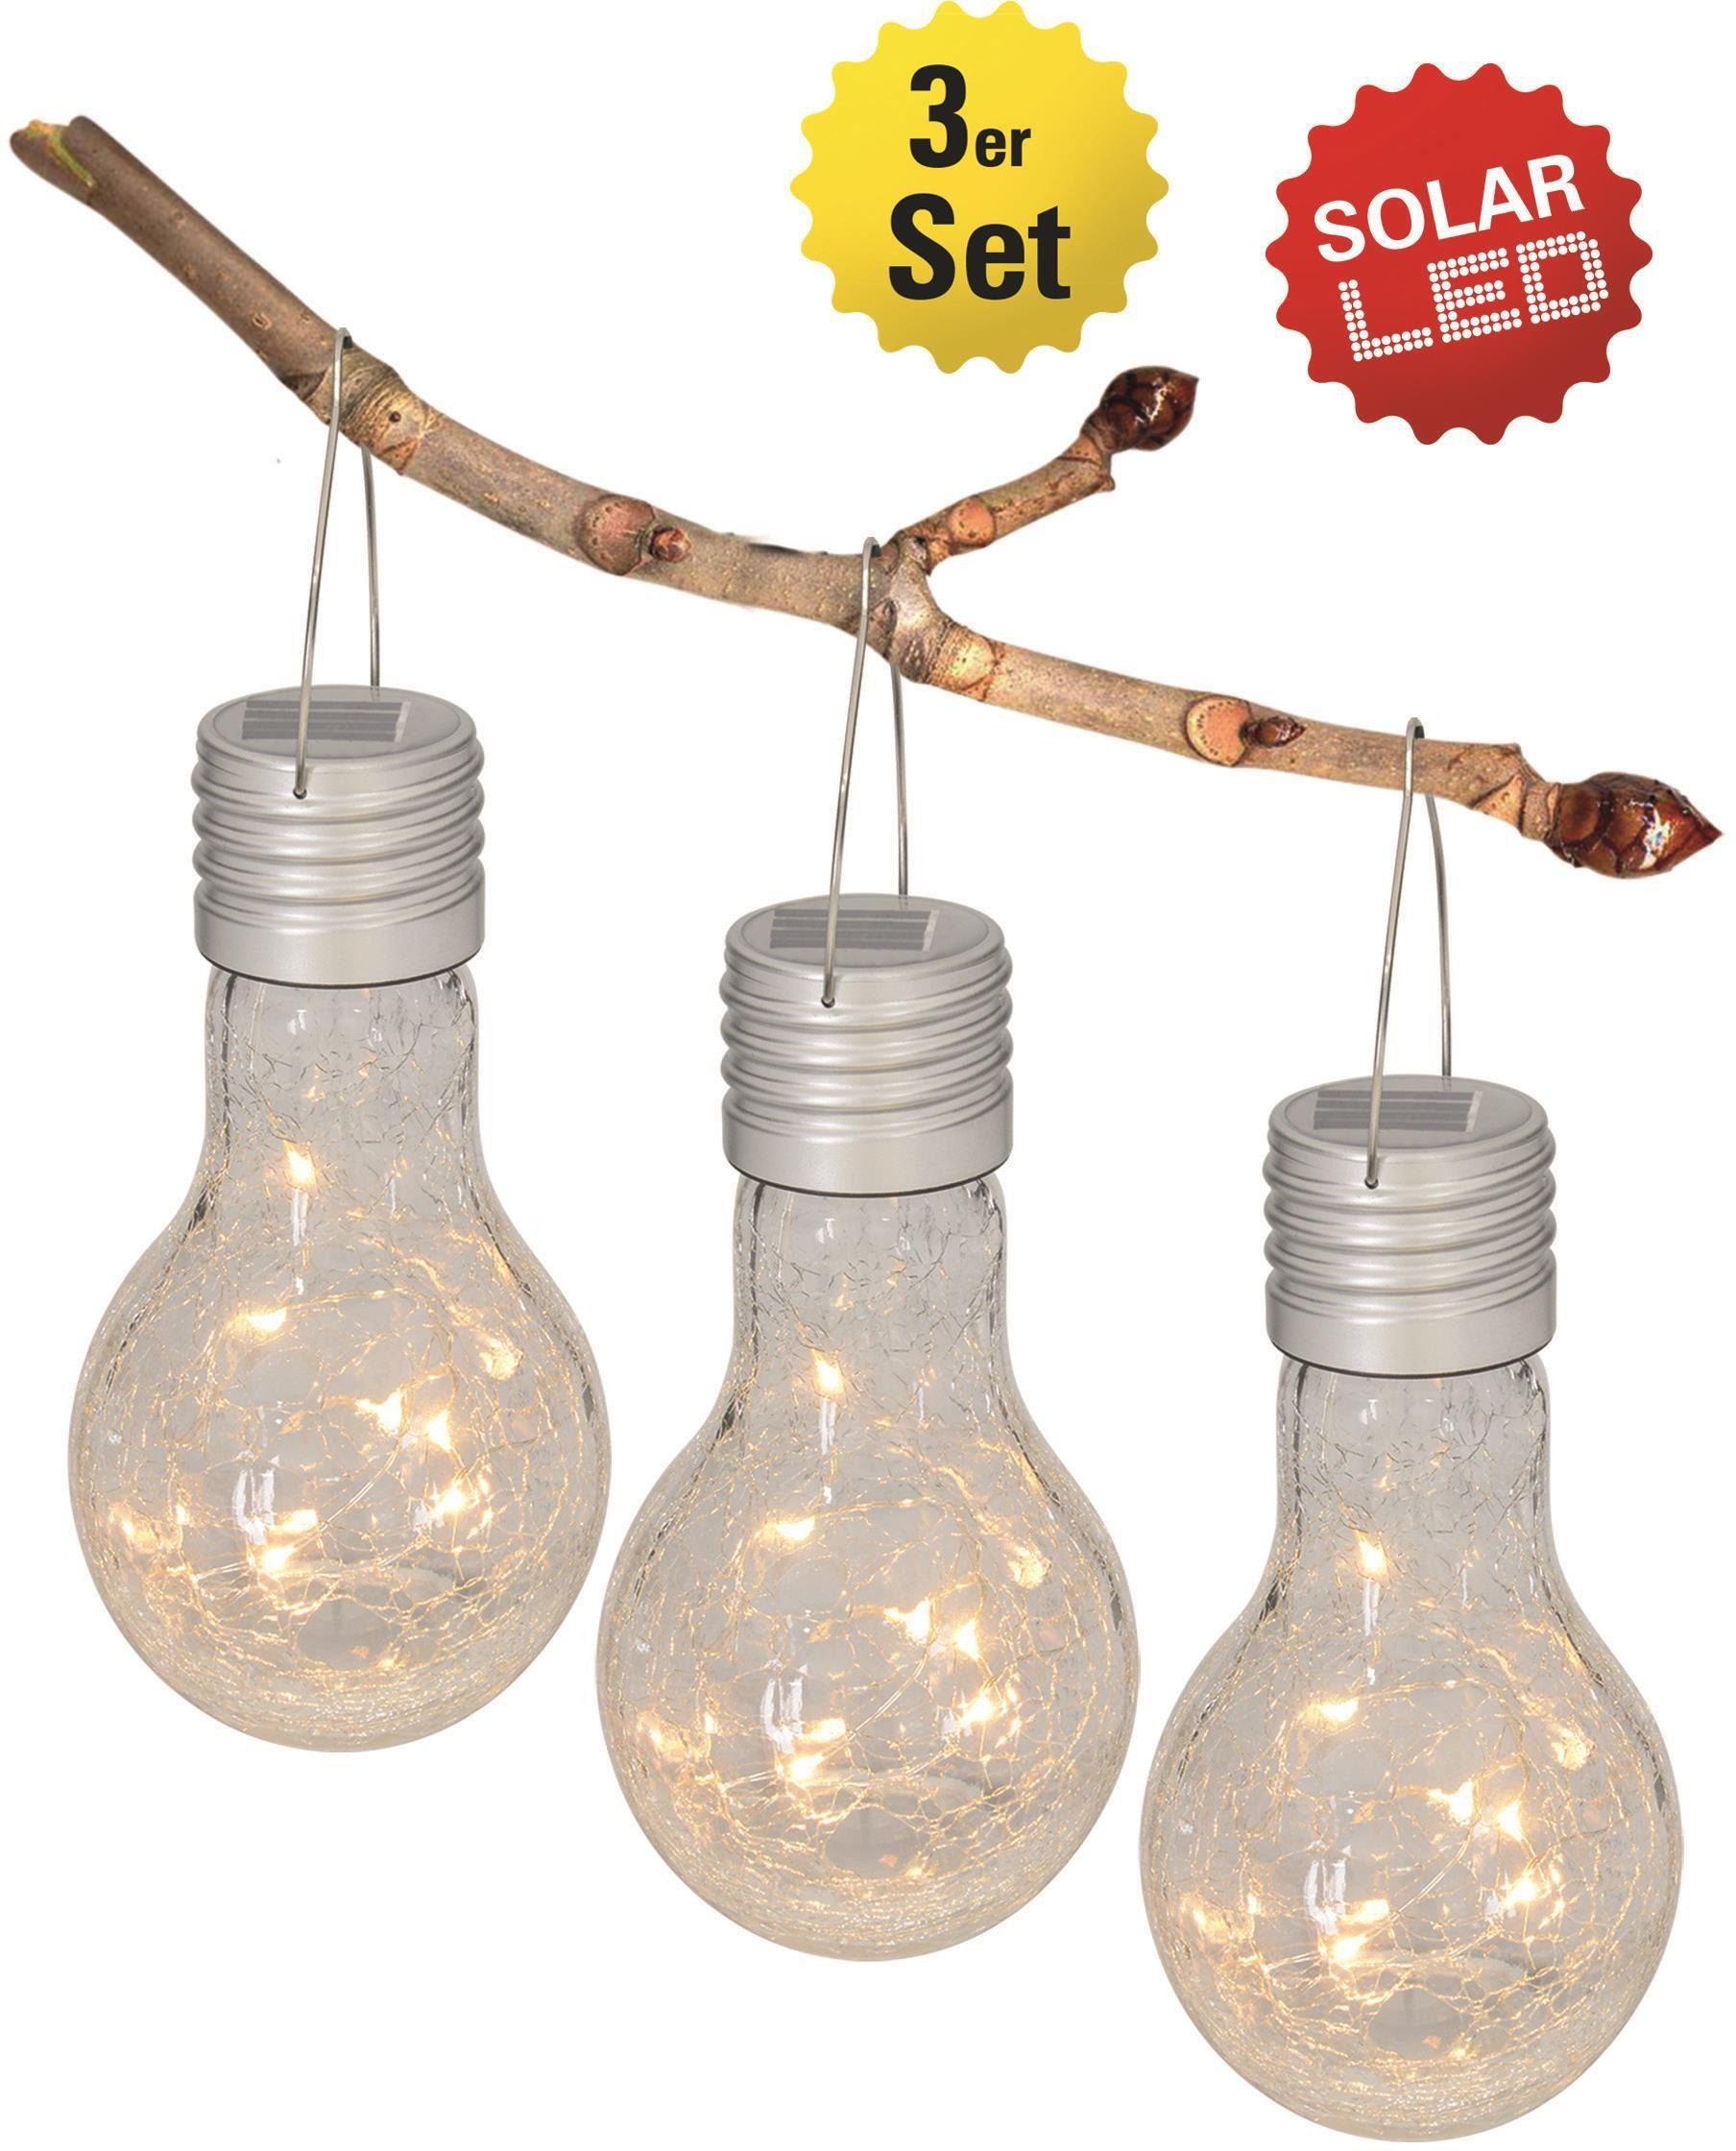 Glas, LED klar, Gartenleuchte fest näve Bulb, Material: Set integriert, Warmweiß, Aufhängemöglichkeit, LED Crackle 3er Farbe: